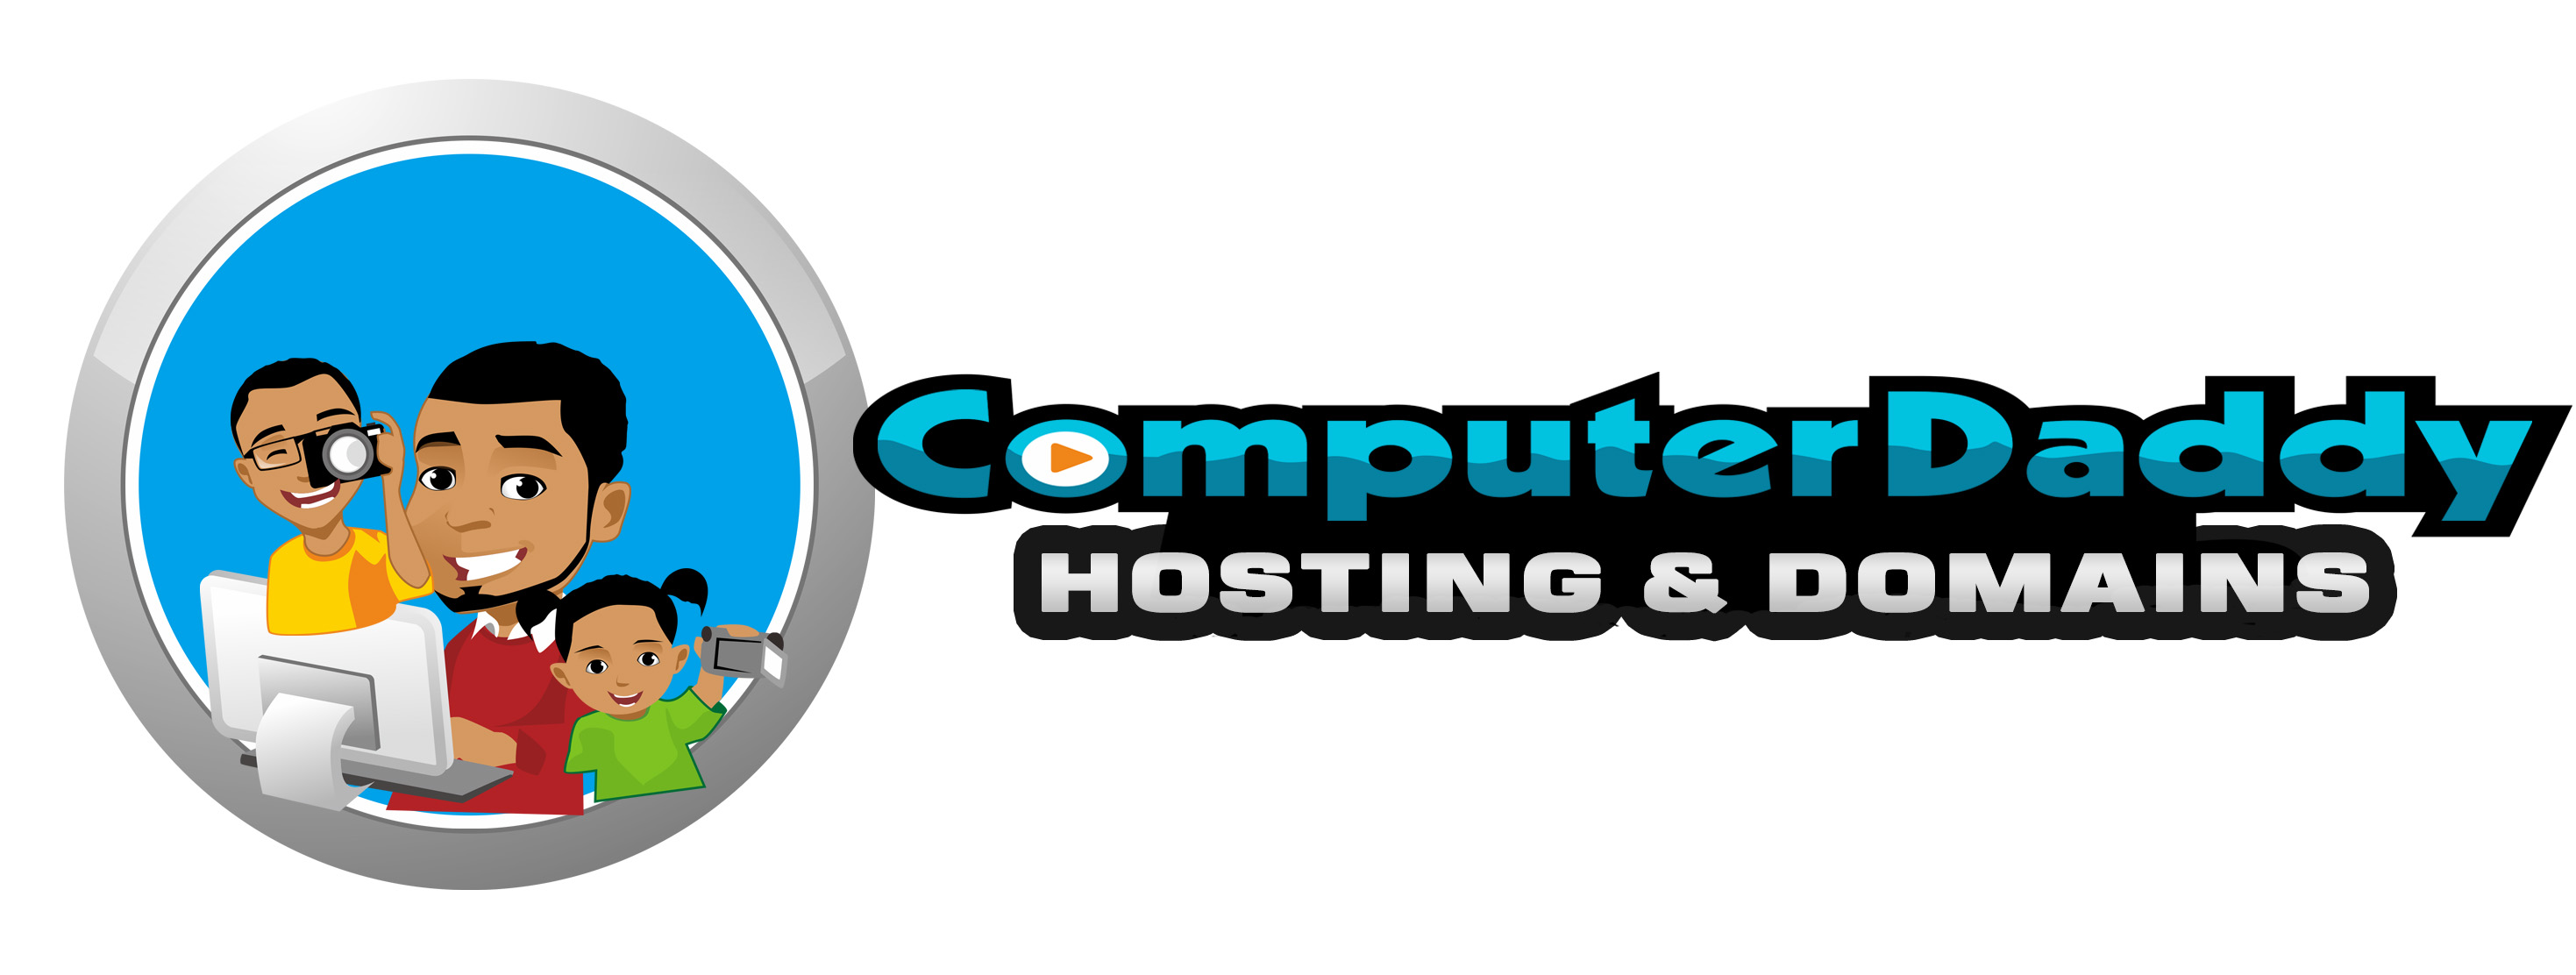 ComputerDaddy Domains & Hosting